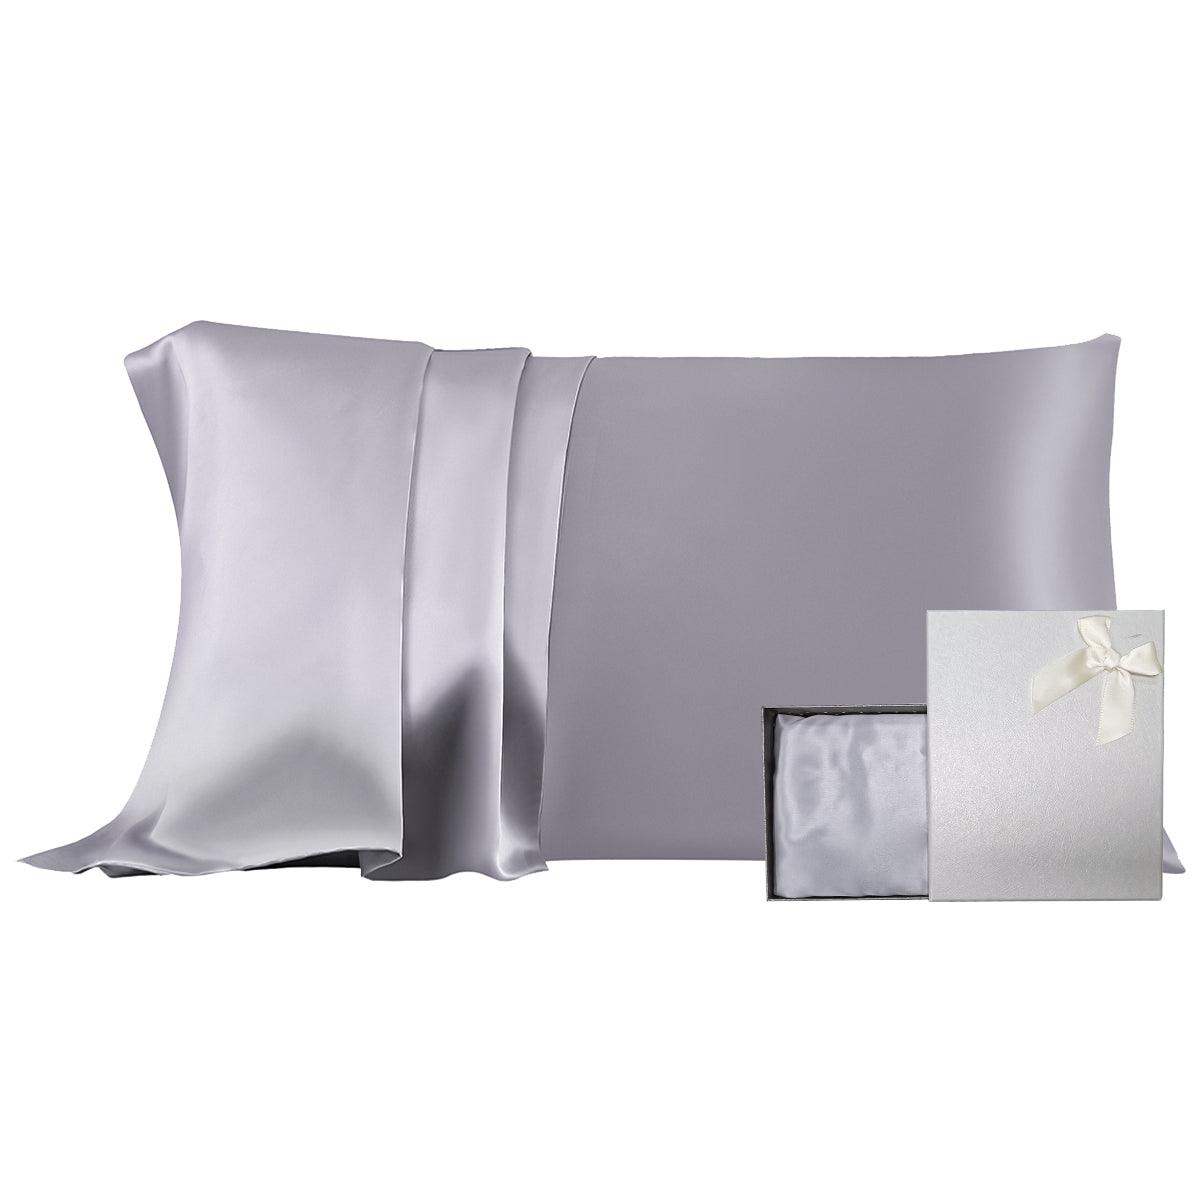 30mm 6A+ Silk Pillowcase With Zipper With Gift Box - promeedsilk